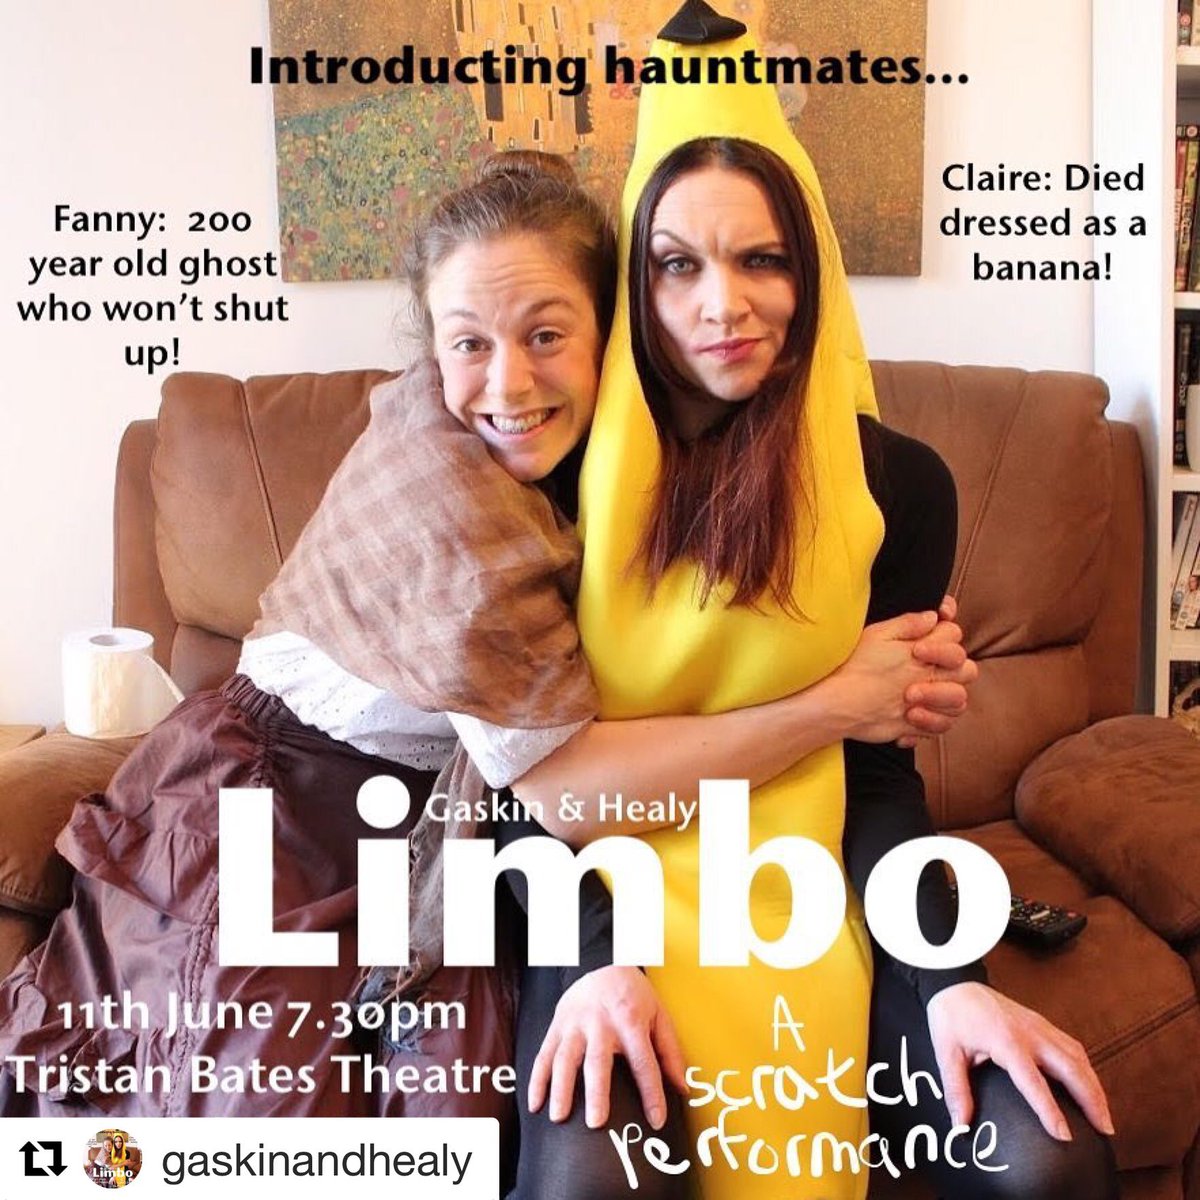 Limbo tickets are ON SALE!!! tristanbatestheatre.co.uk/whats-on/limbo #limbo #comedy #funnyfemales #comedyduo #funny #daretocreate